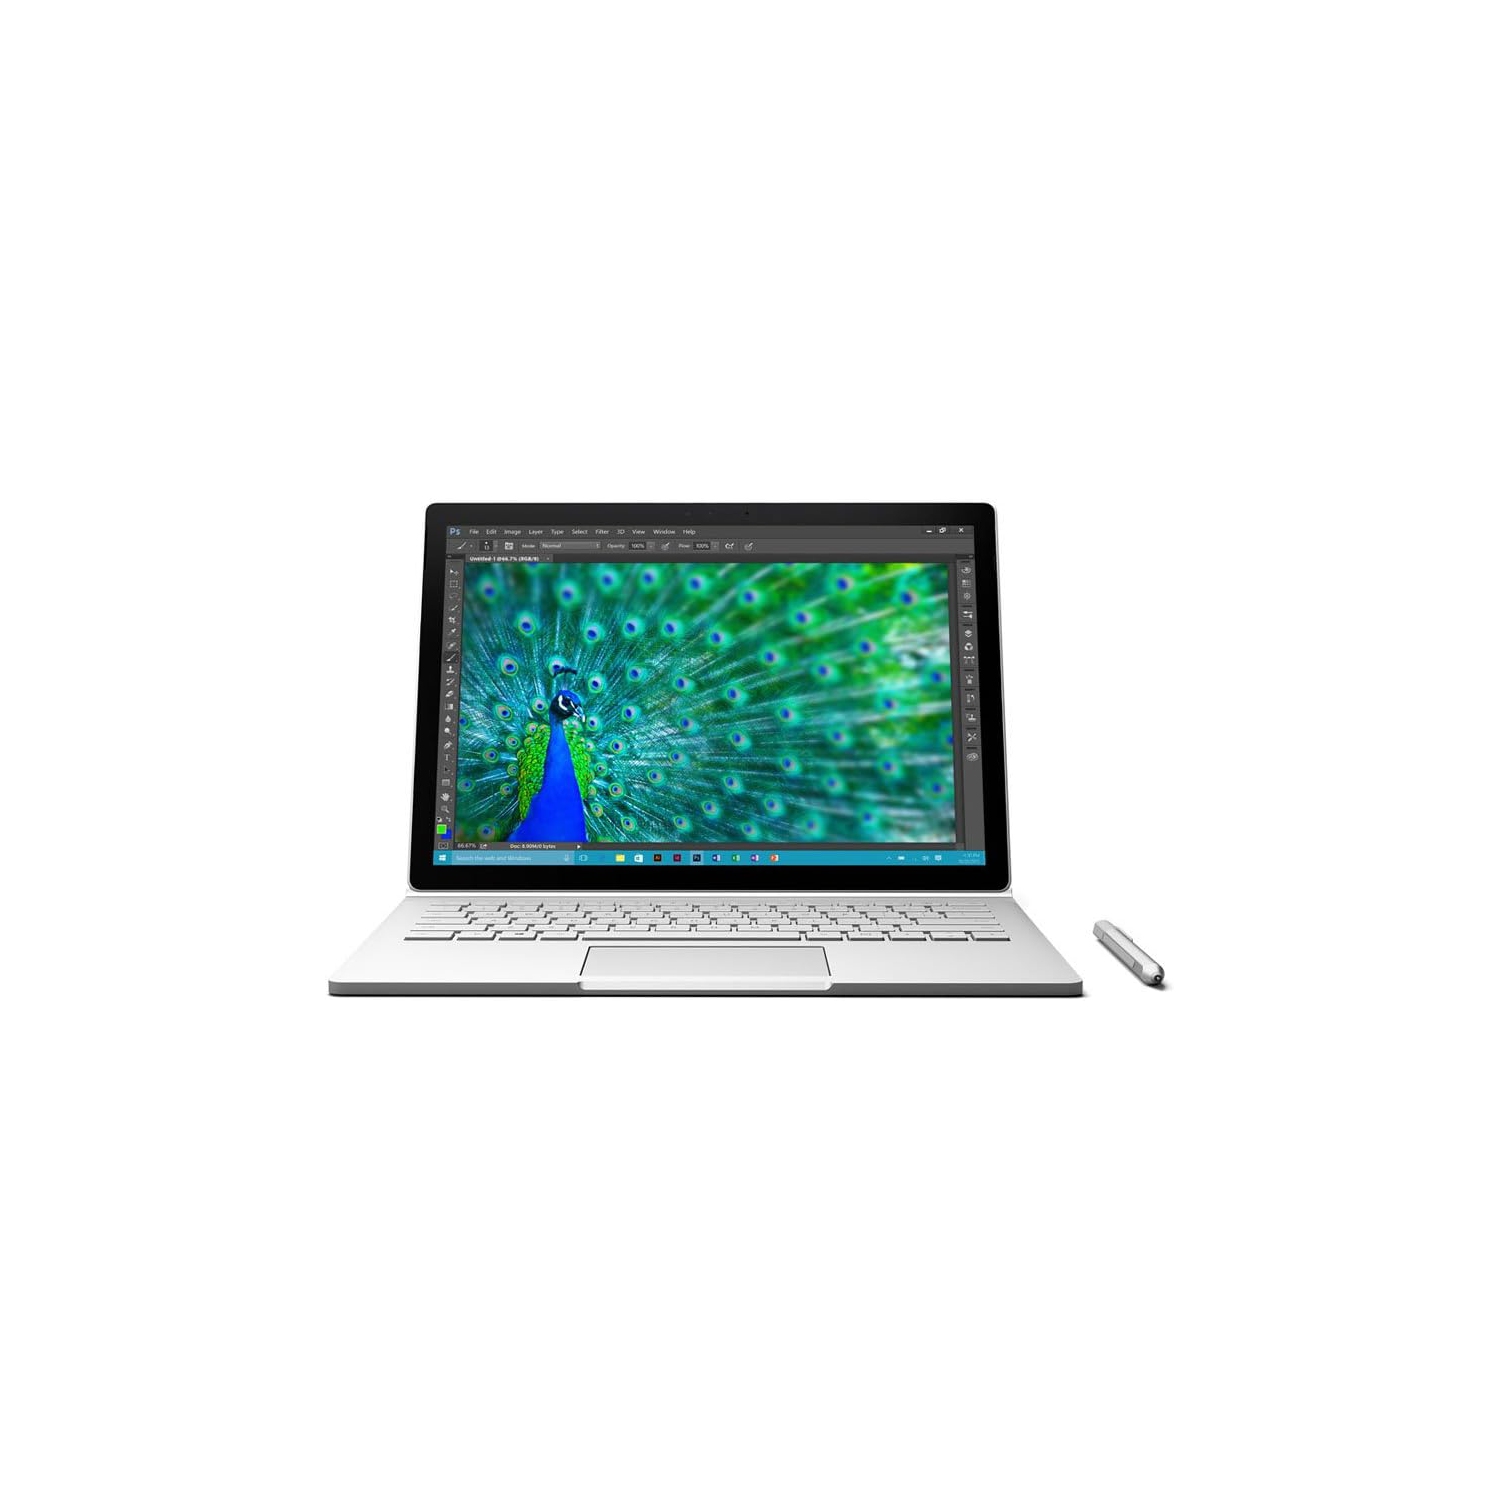 Microsoft Surface book 9ER-00001 13.5" Touchscreen Laptop - Silver (Intel Core i7 6600U / 256GB SSD / 8 GB / Nvidia GTX 965M Graphics / Windows 10 Pro) - English